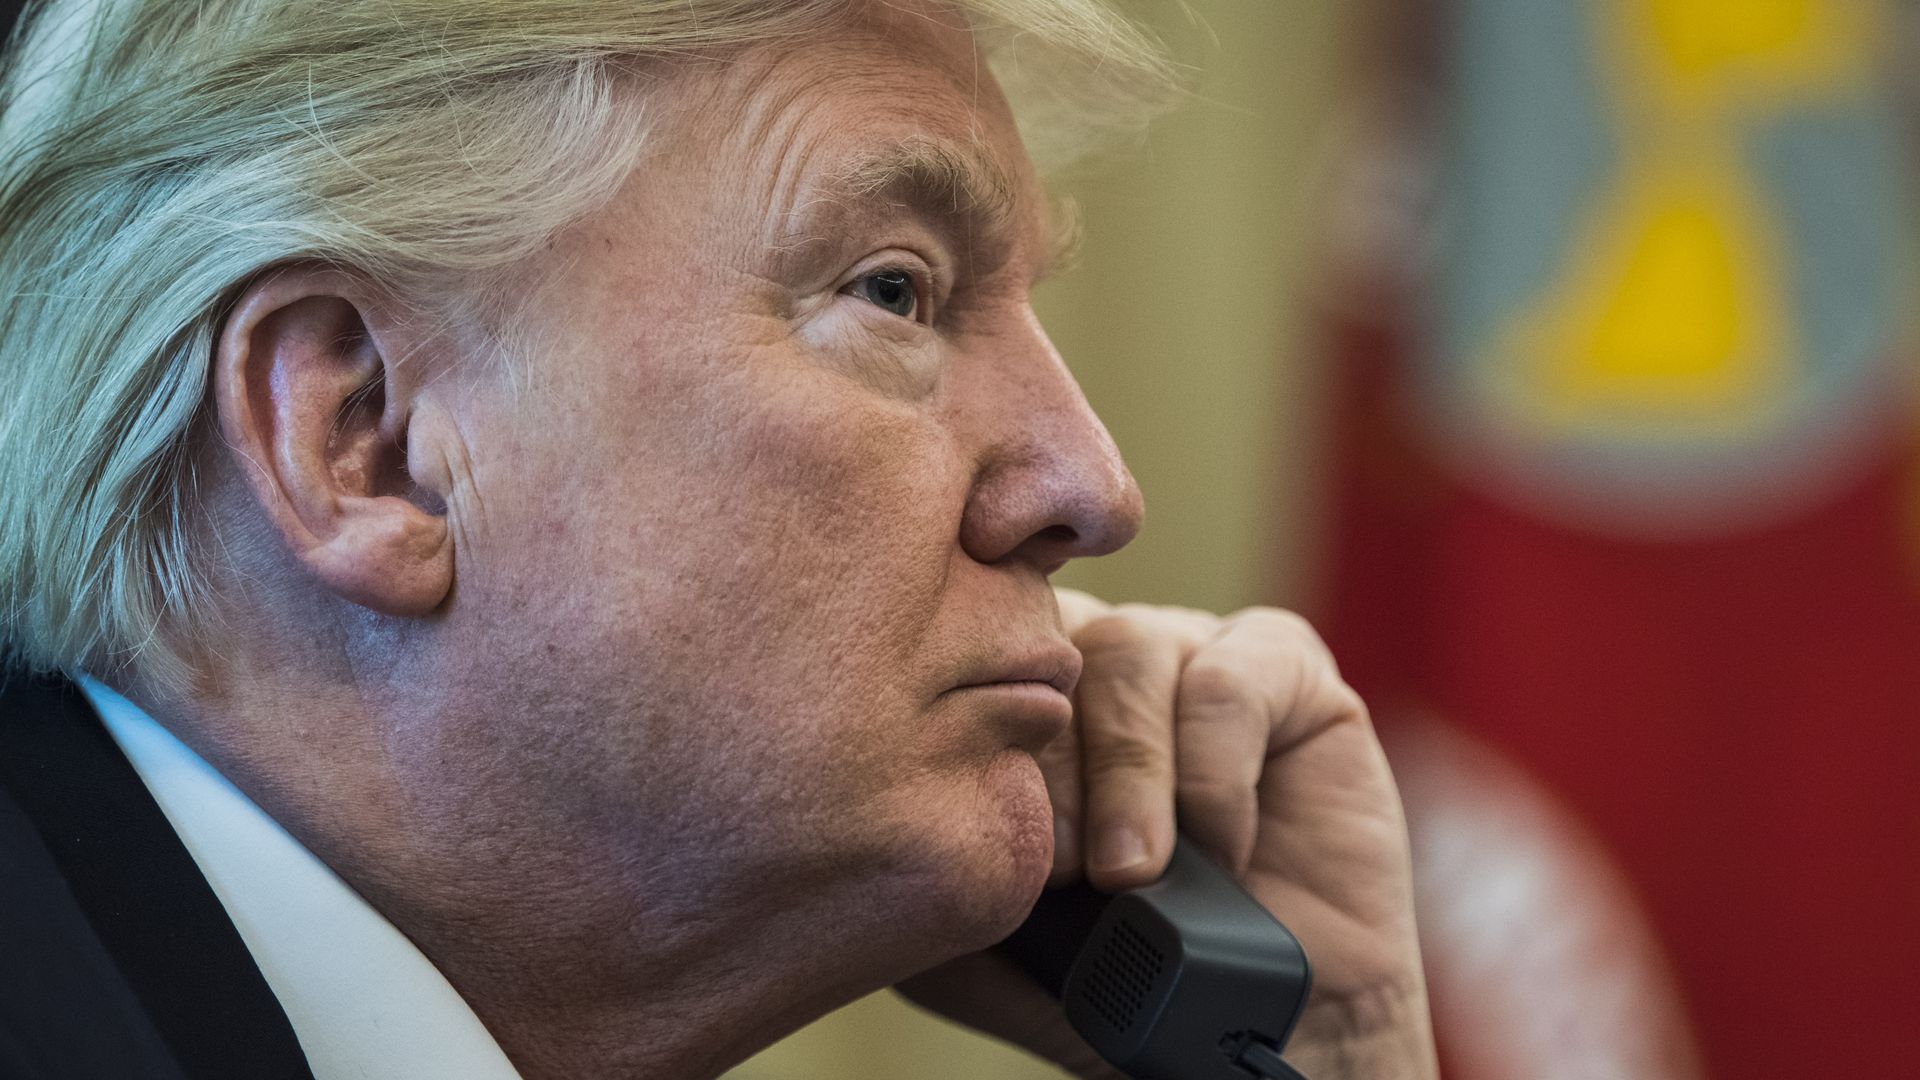 Trump on the phone.